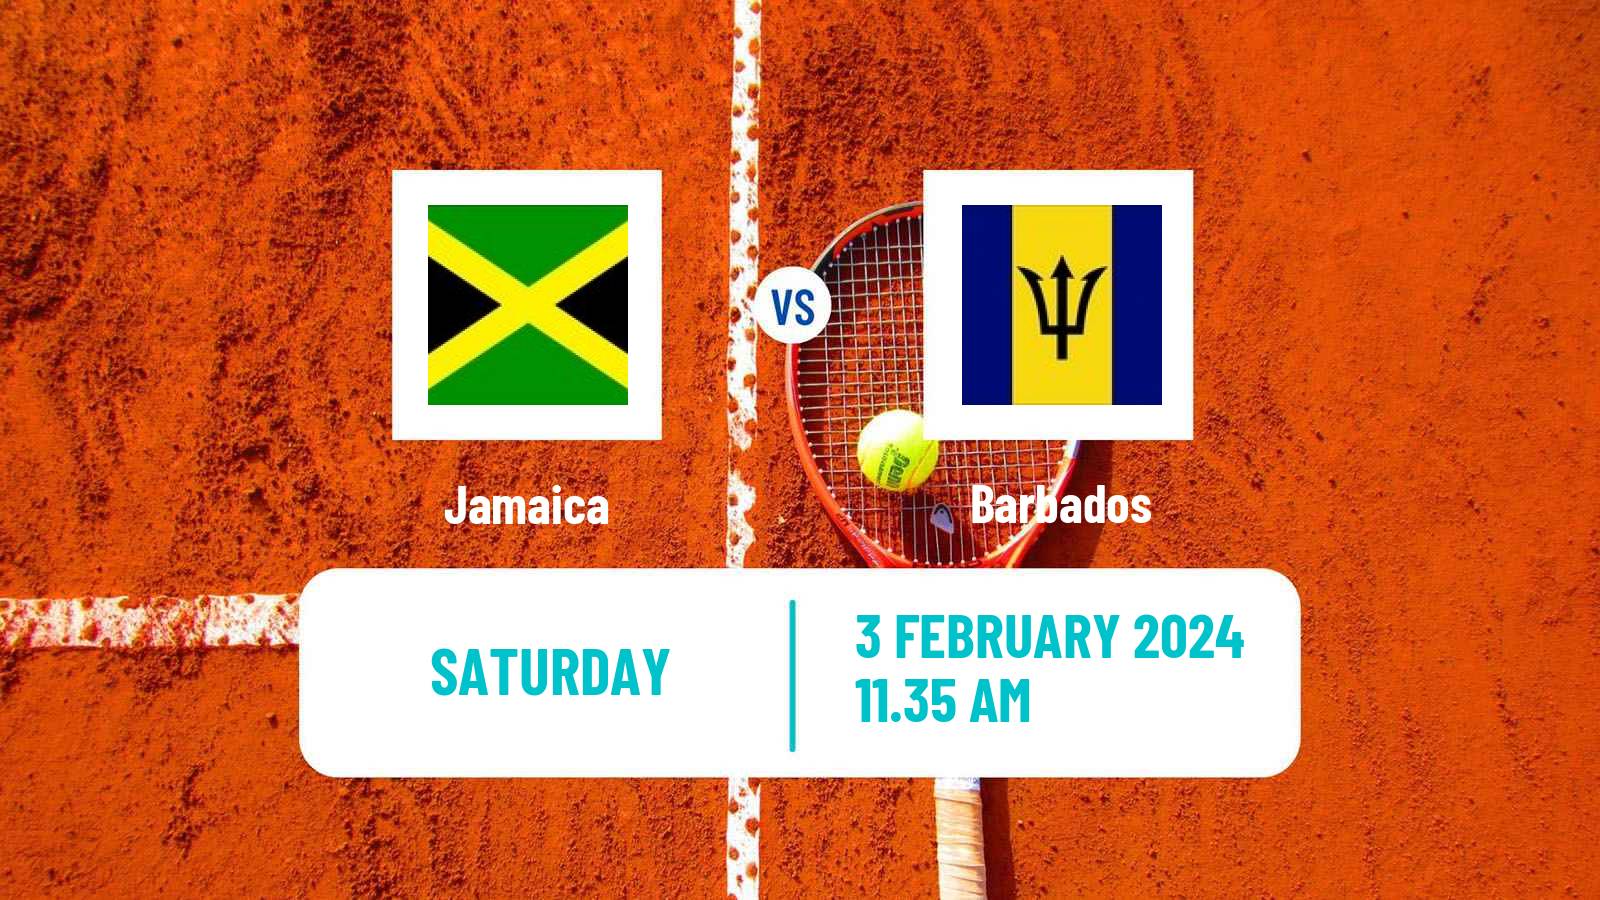 Tennis Davis Cup World Group II Teams Jamaica - Barbados